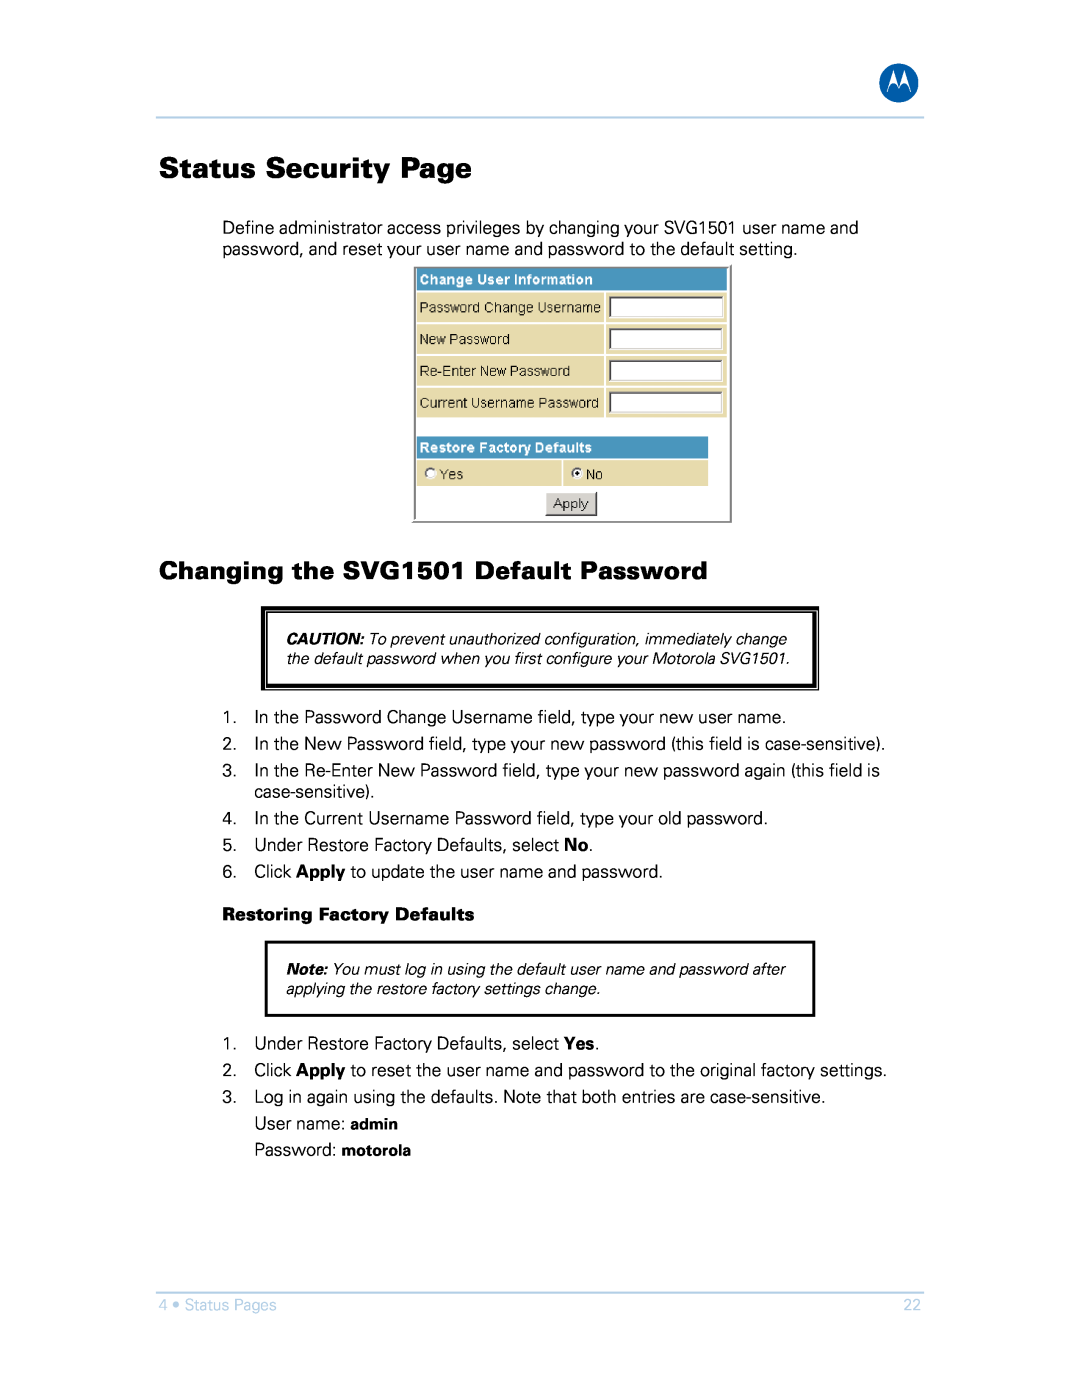 Motorola SVG1501UE, SVG1501E manual Status Security Page, Changing the SVG1501 Default Password, Restoring Factory Defaults 